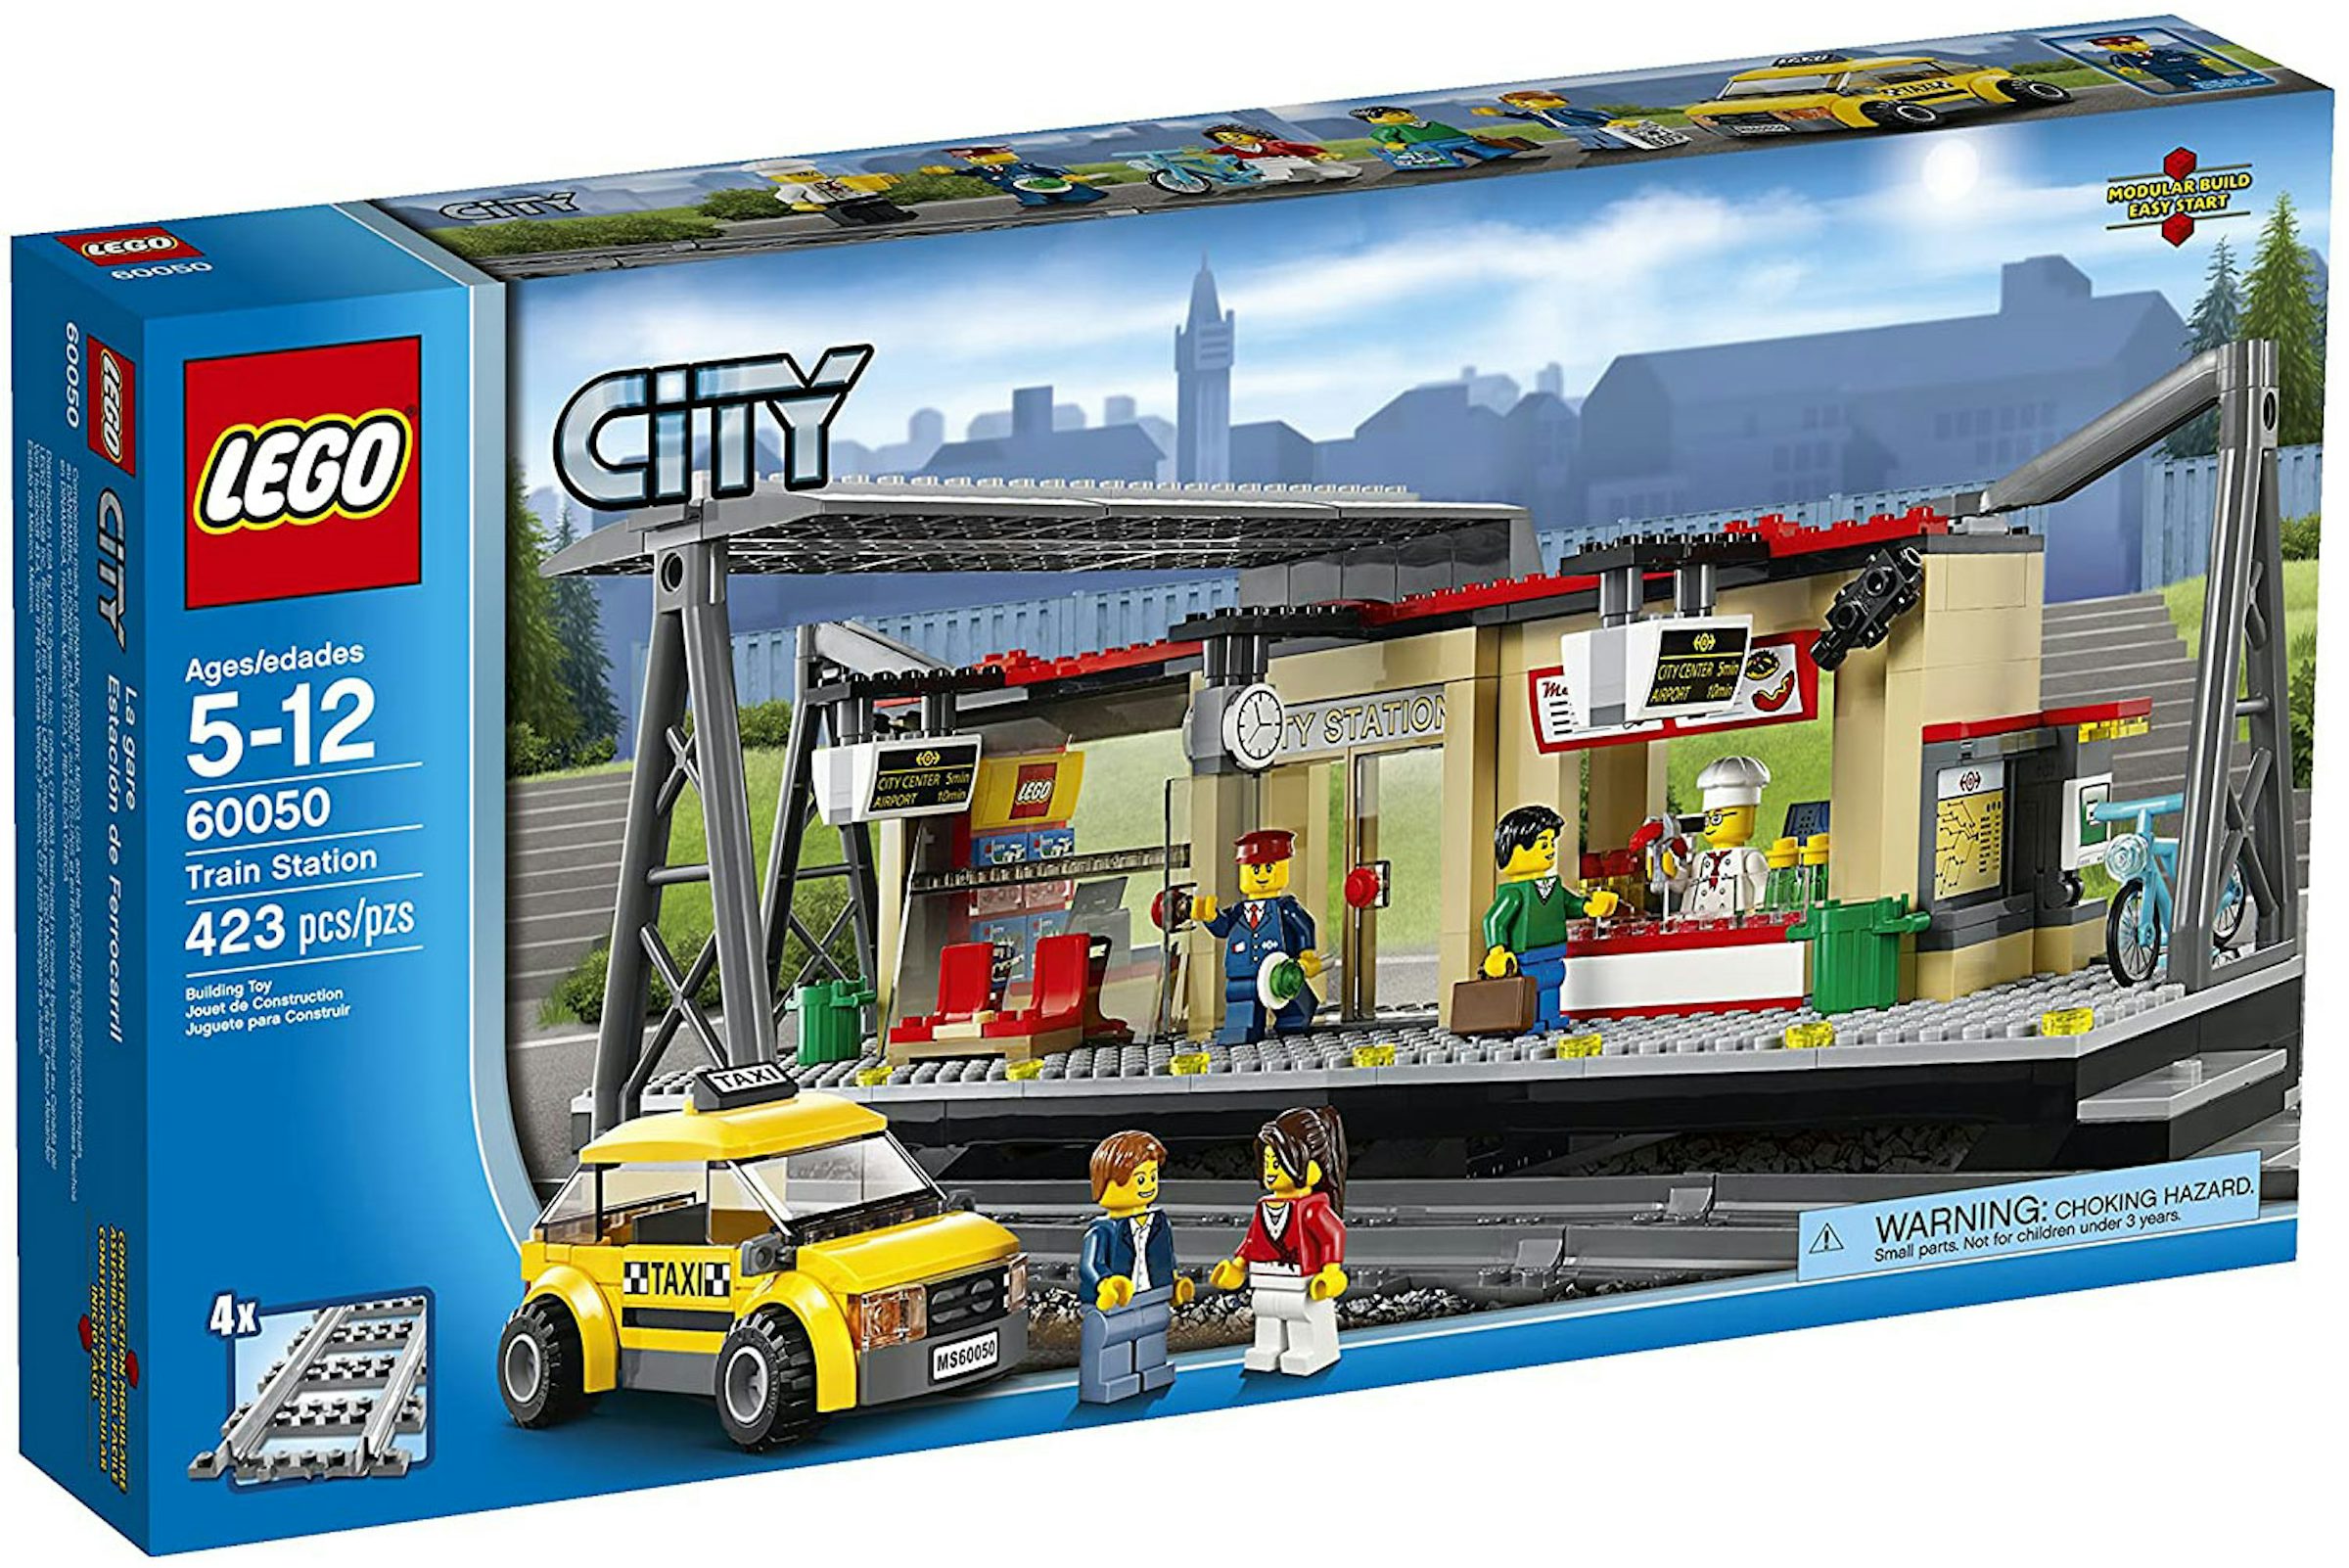 https://images.stockx.com/images/LEGO-City-Train-Station-Set-60050.jpg?fit=fill&bg=FFFFFF&w=1200&h=857&fm=jpg&auto=compress&dpr=2&trim=color&updated_at=1619102697&q=60